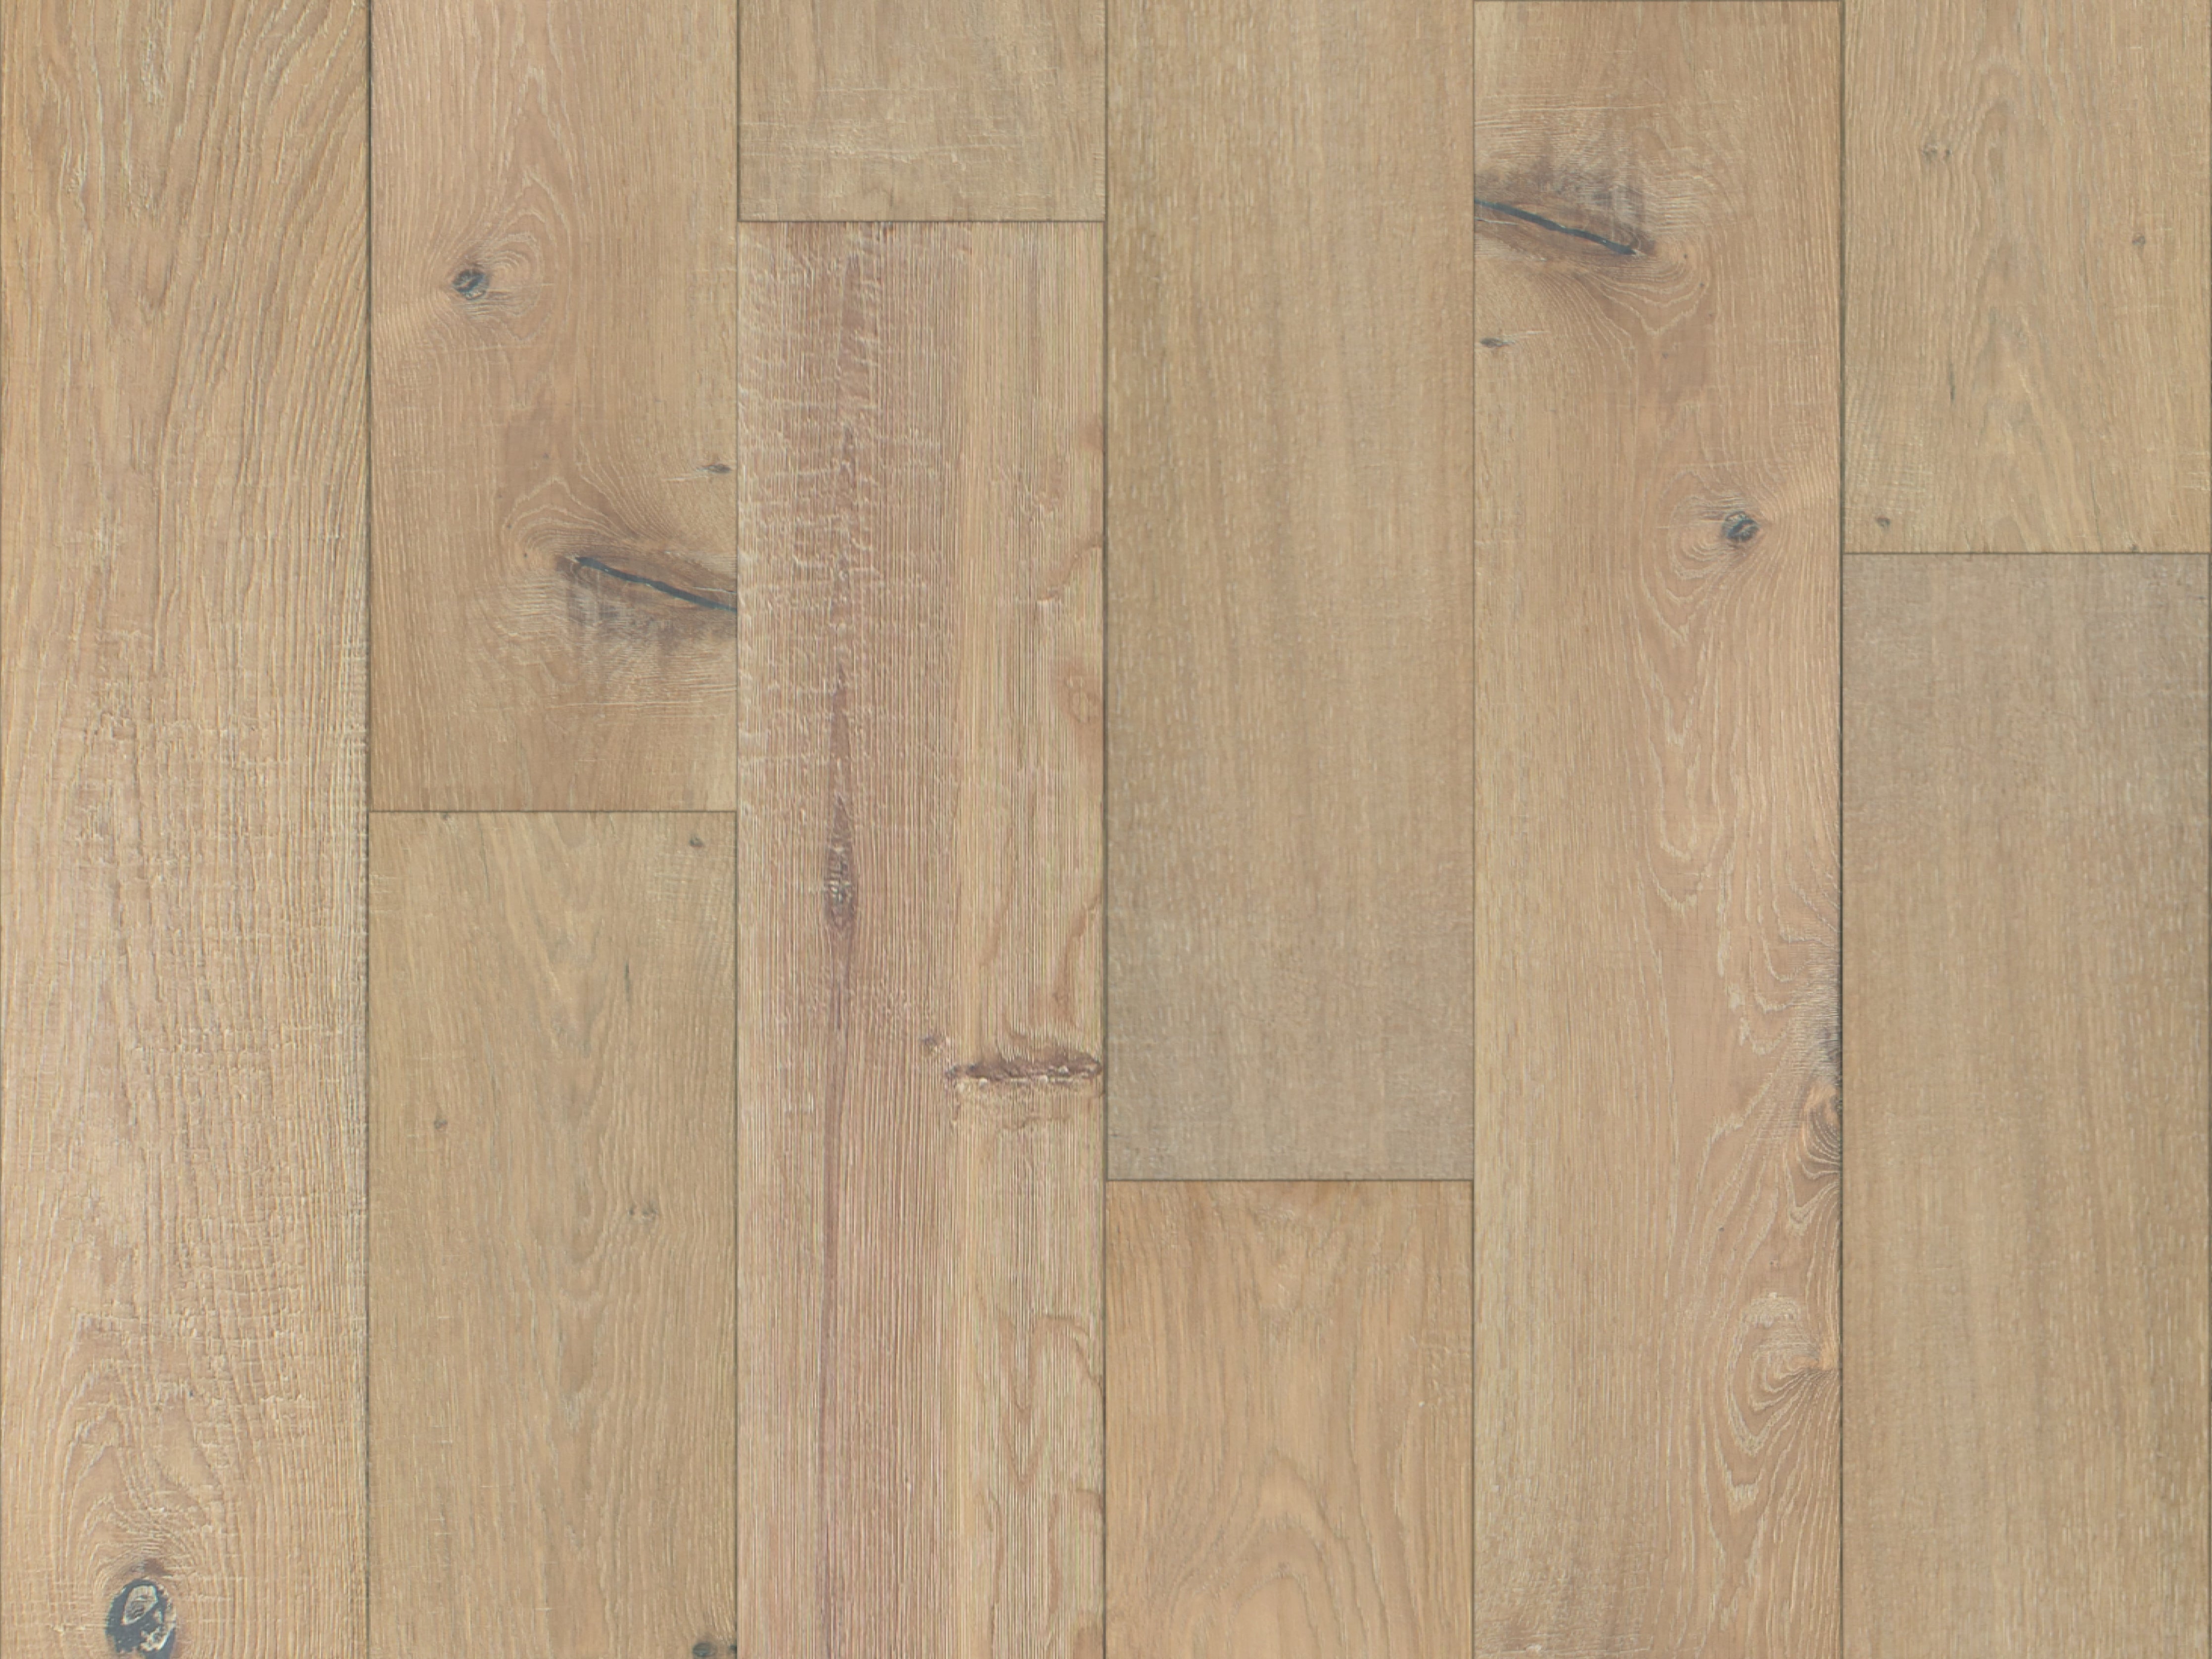 duchateau signature strata terrene european oak engineered hardnatural wood floor hard wax oil finish for interior use distributed by surface group international